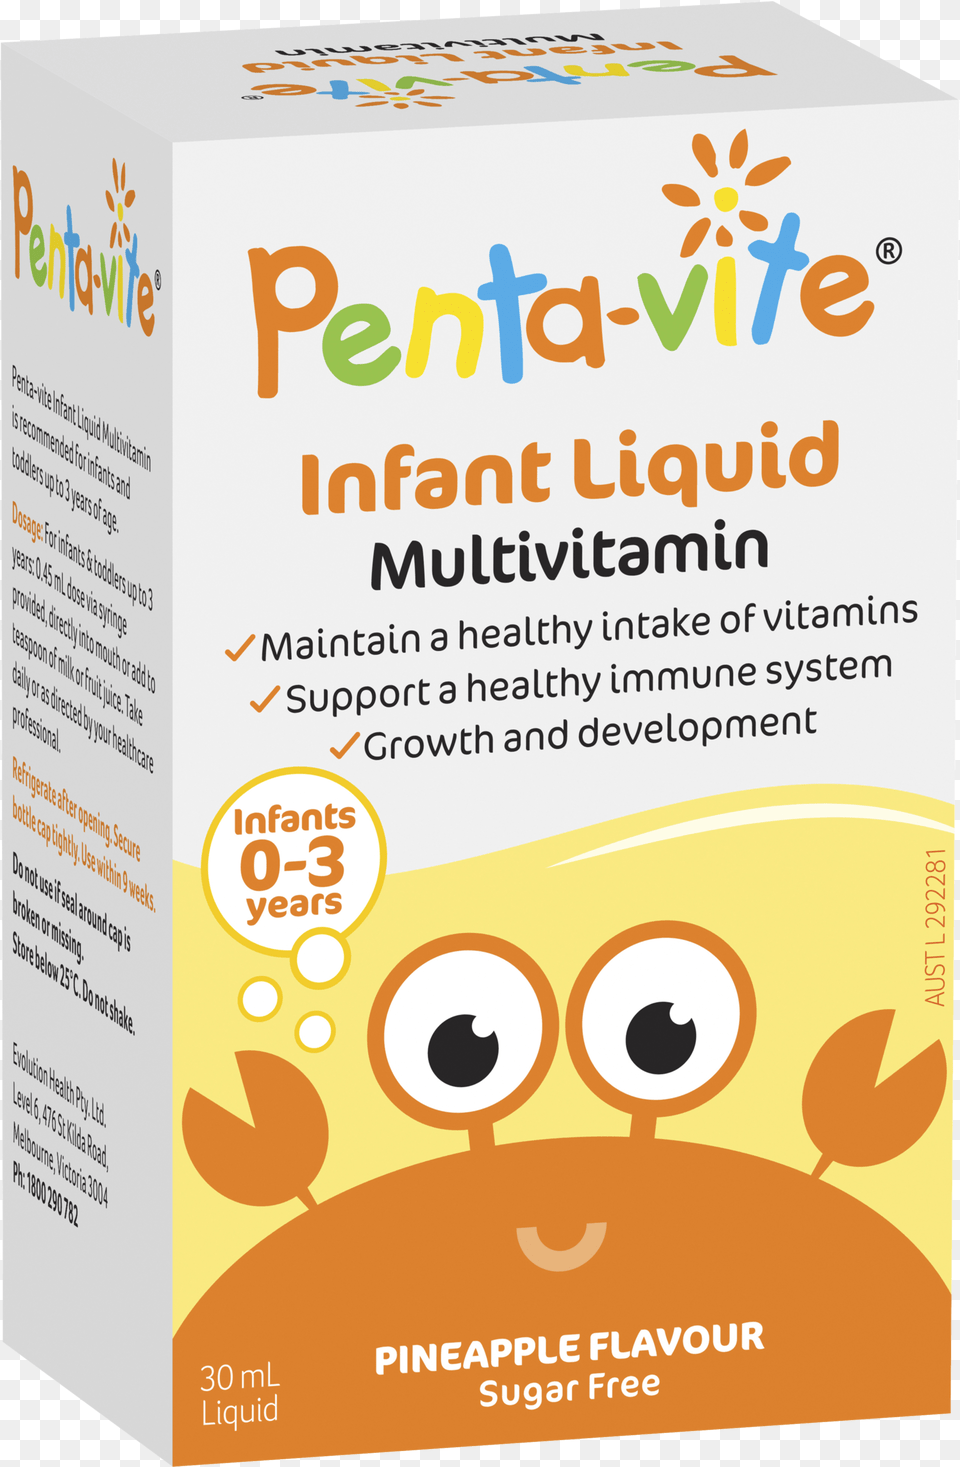 Infant Liquid Multivitamin Pentavite, Advertisement, Poster, Food, Seasoning Png Image